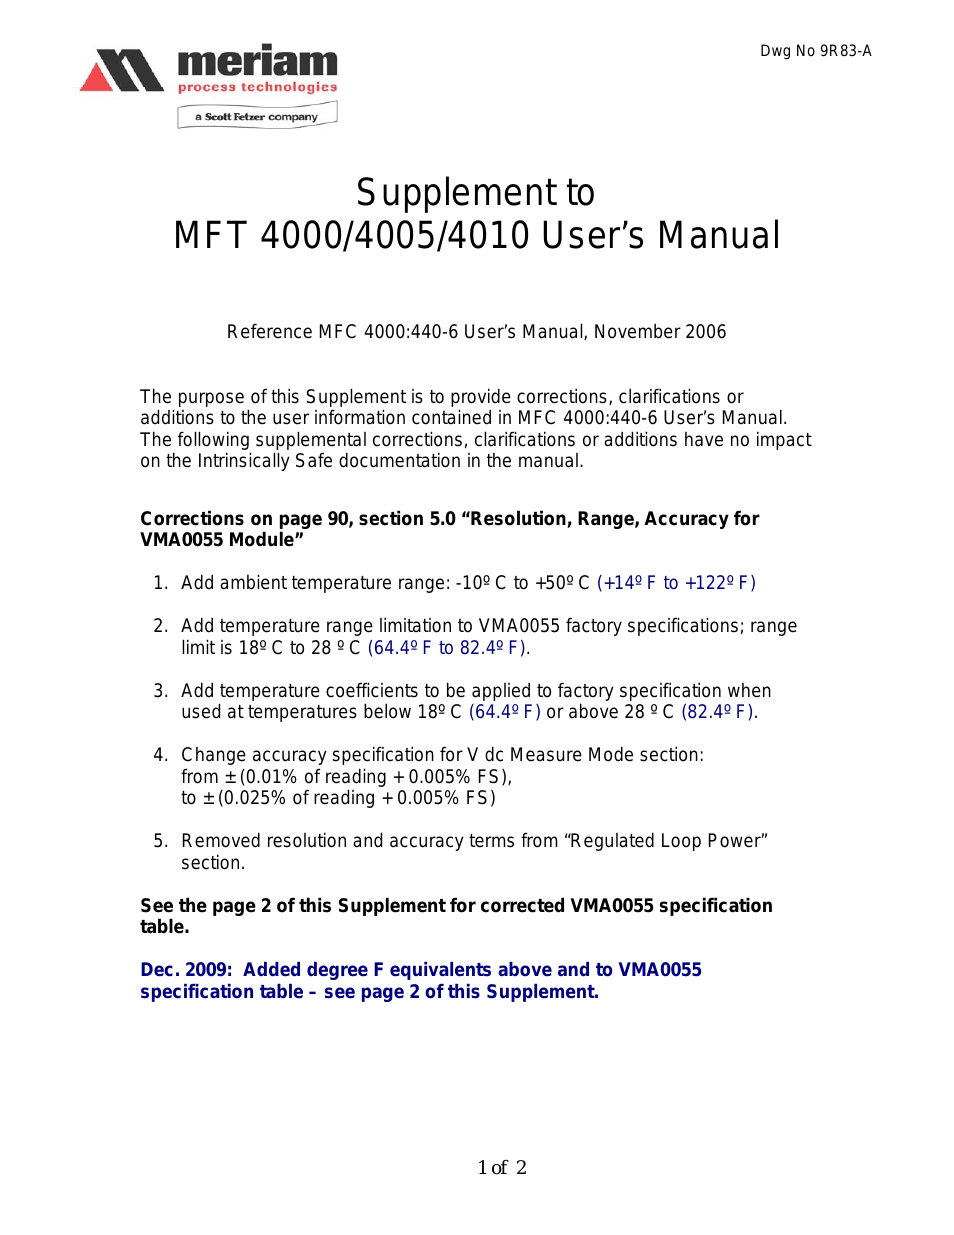 MFT 4000_4005_4010 Supplement